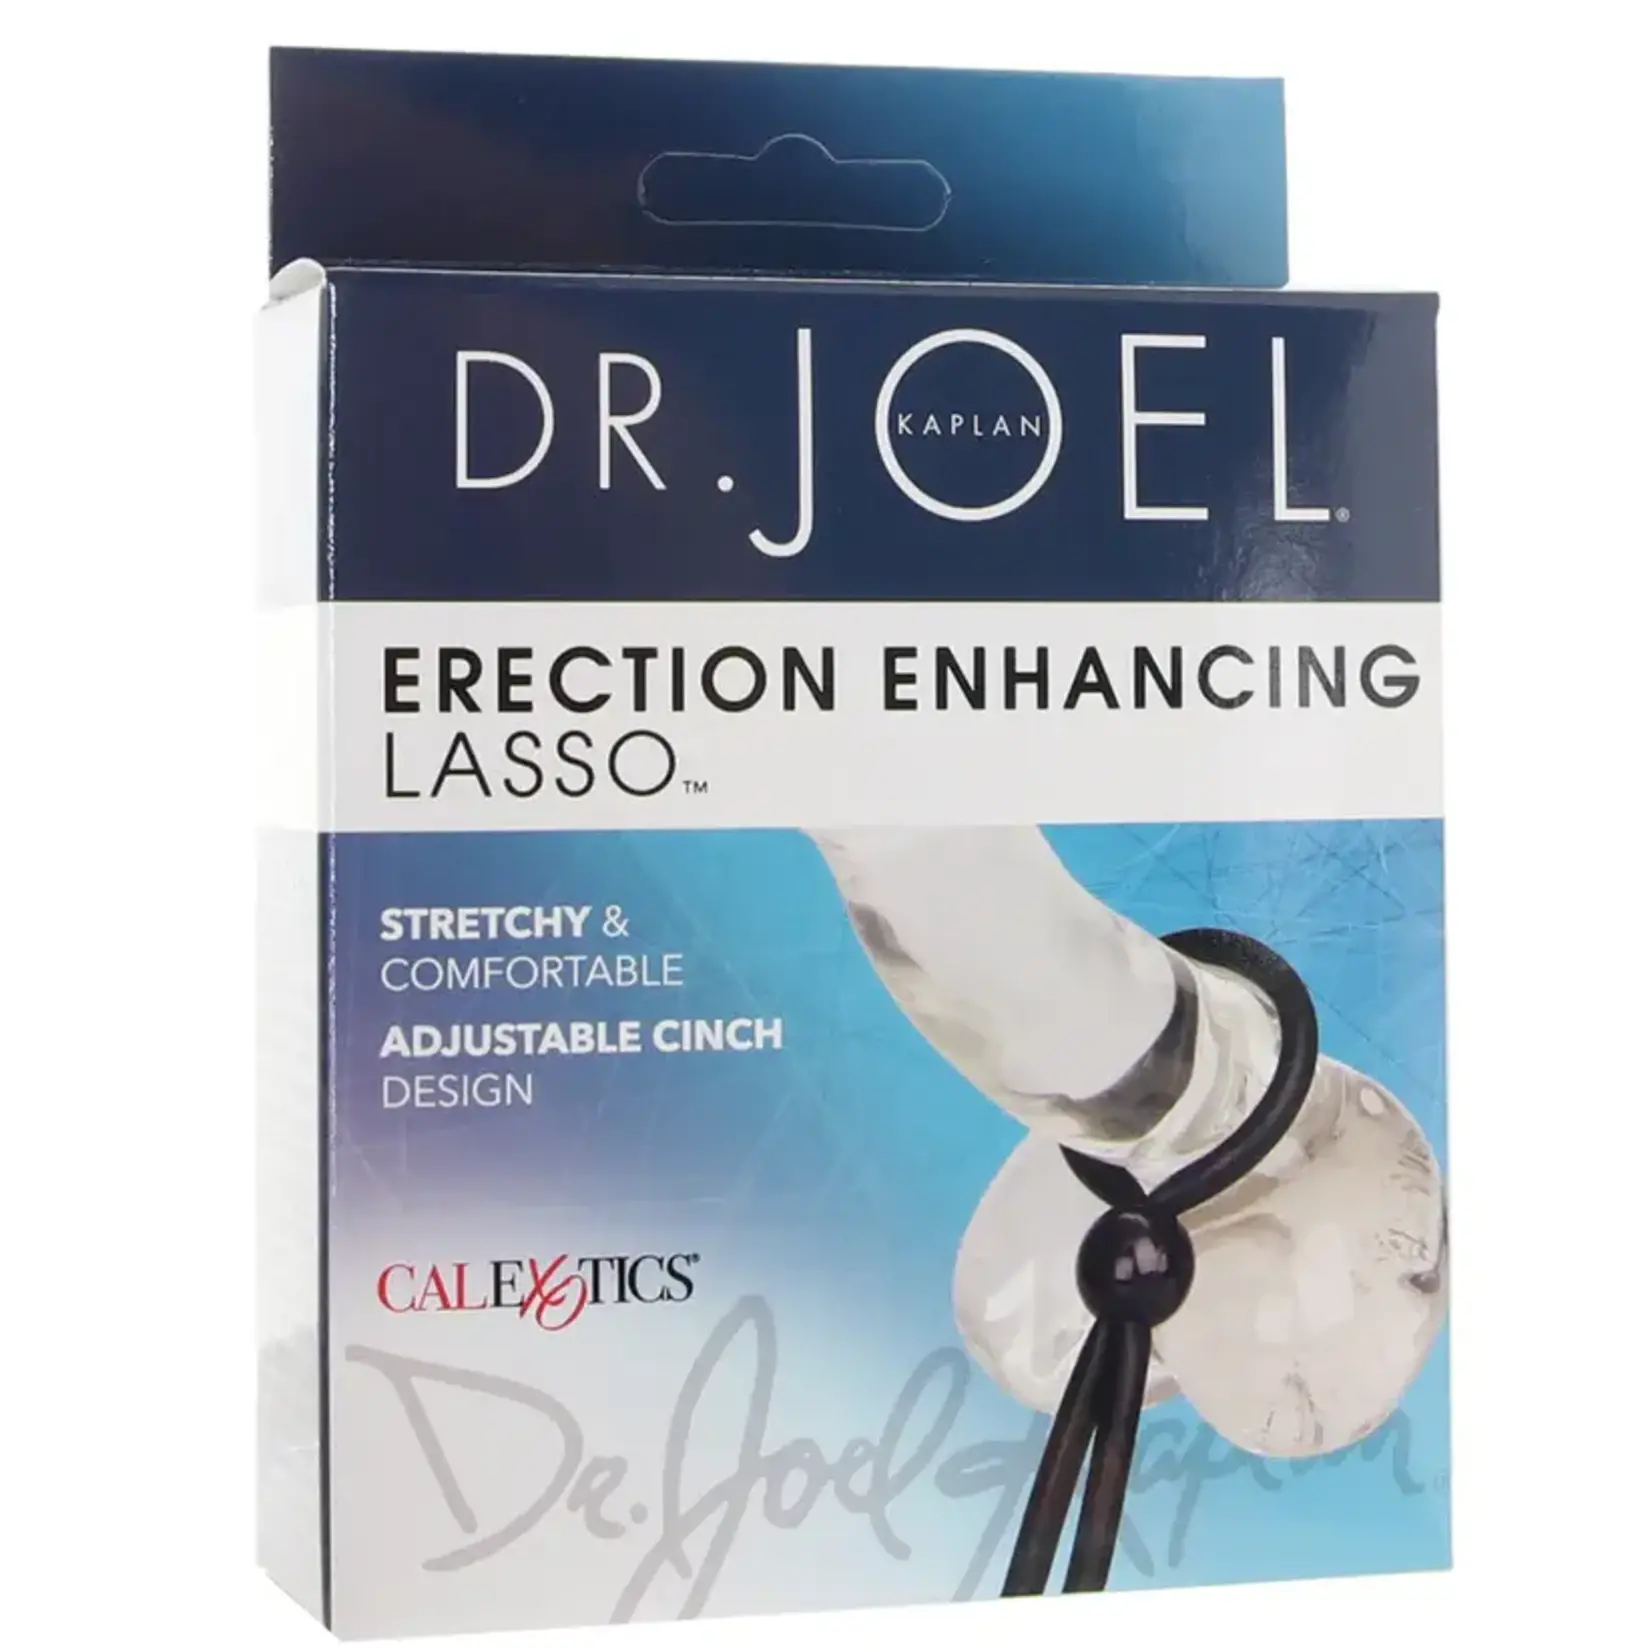 CALEXOTICS DR. JOEL ERECTION ENHANCING LASSO